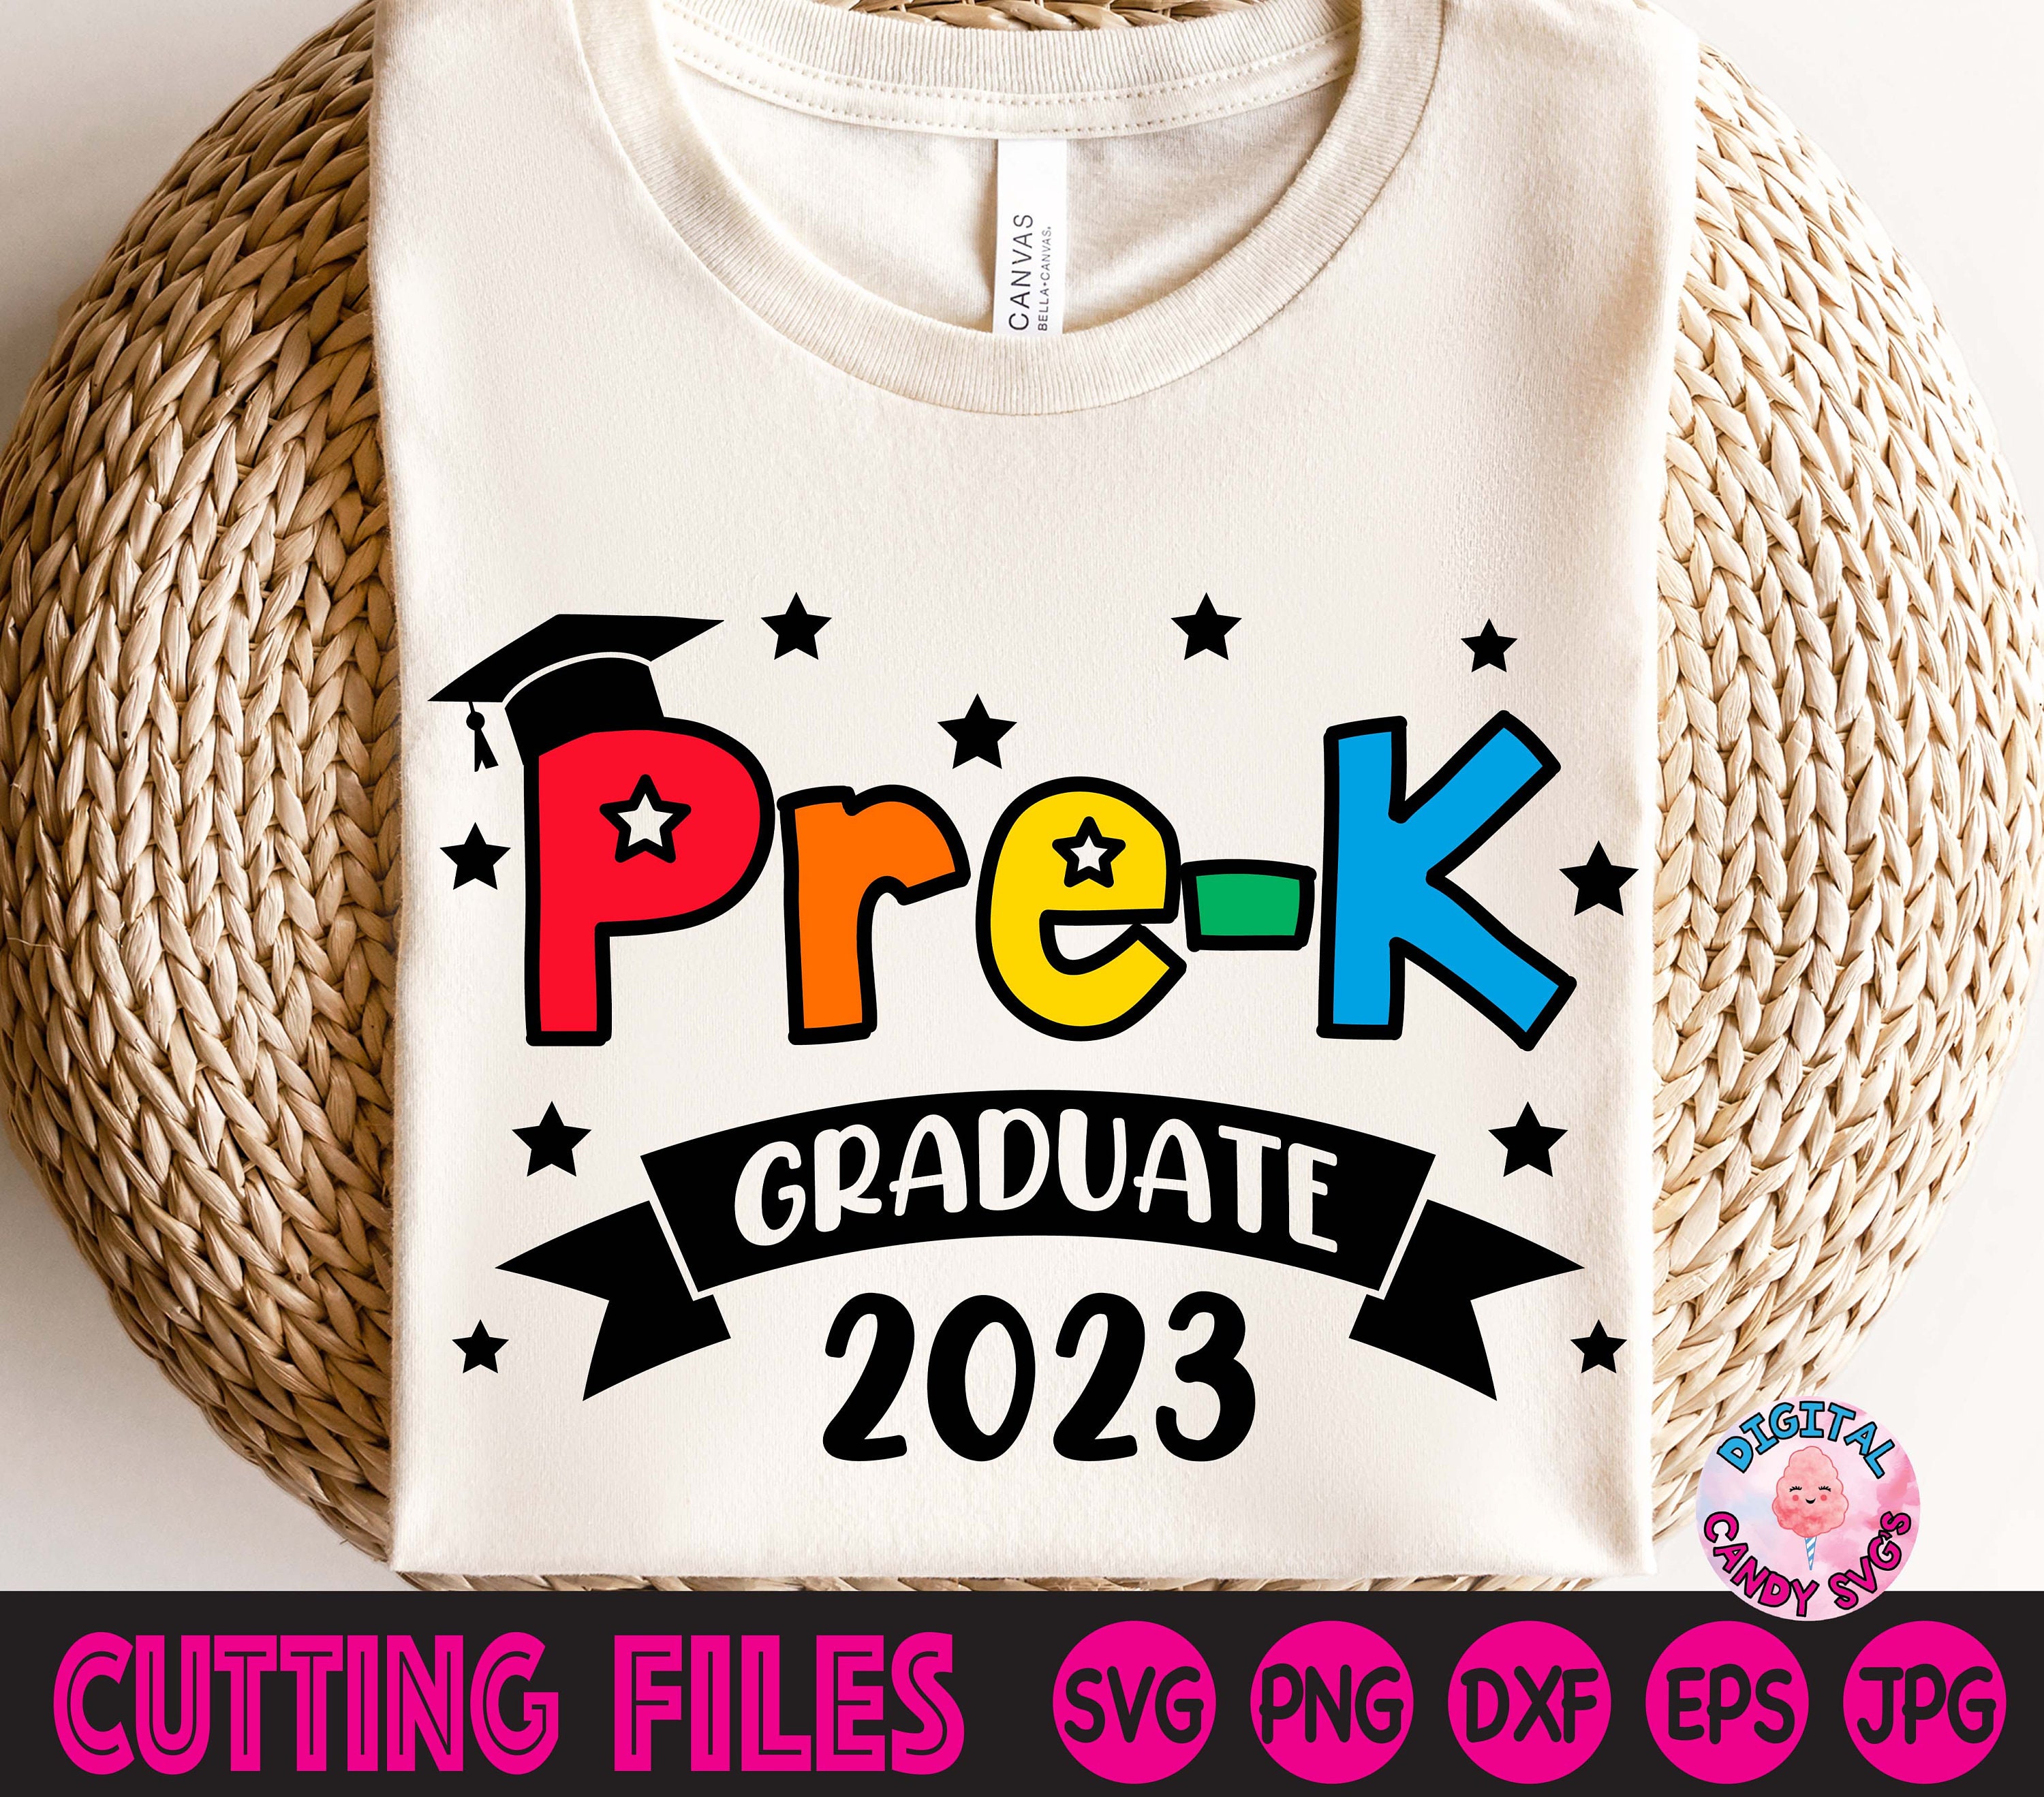 2023 PRE-K Graduation Cap Topper Printable, Graduation Printable,  Graduation Hat Design, Graduation Topper Printable, Digital, Prek Grad PDF  